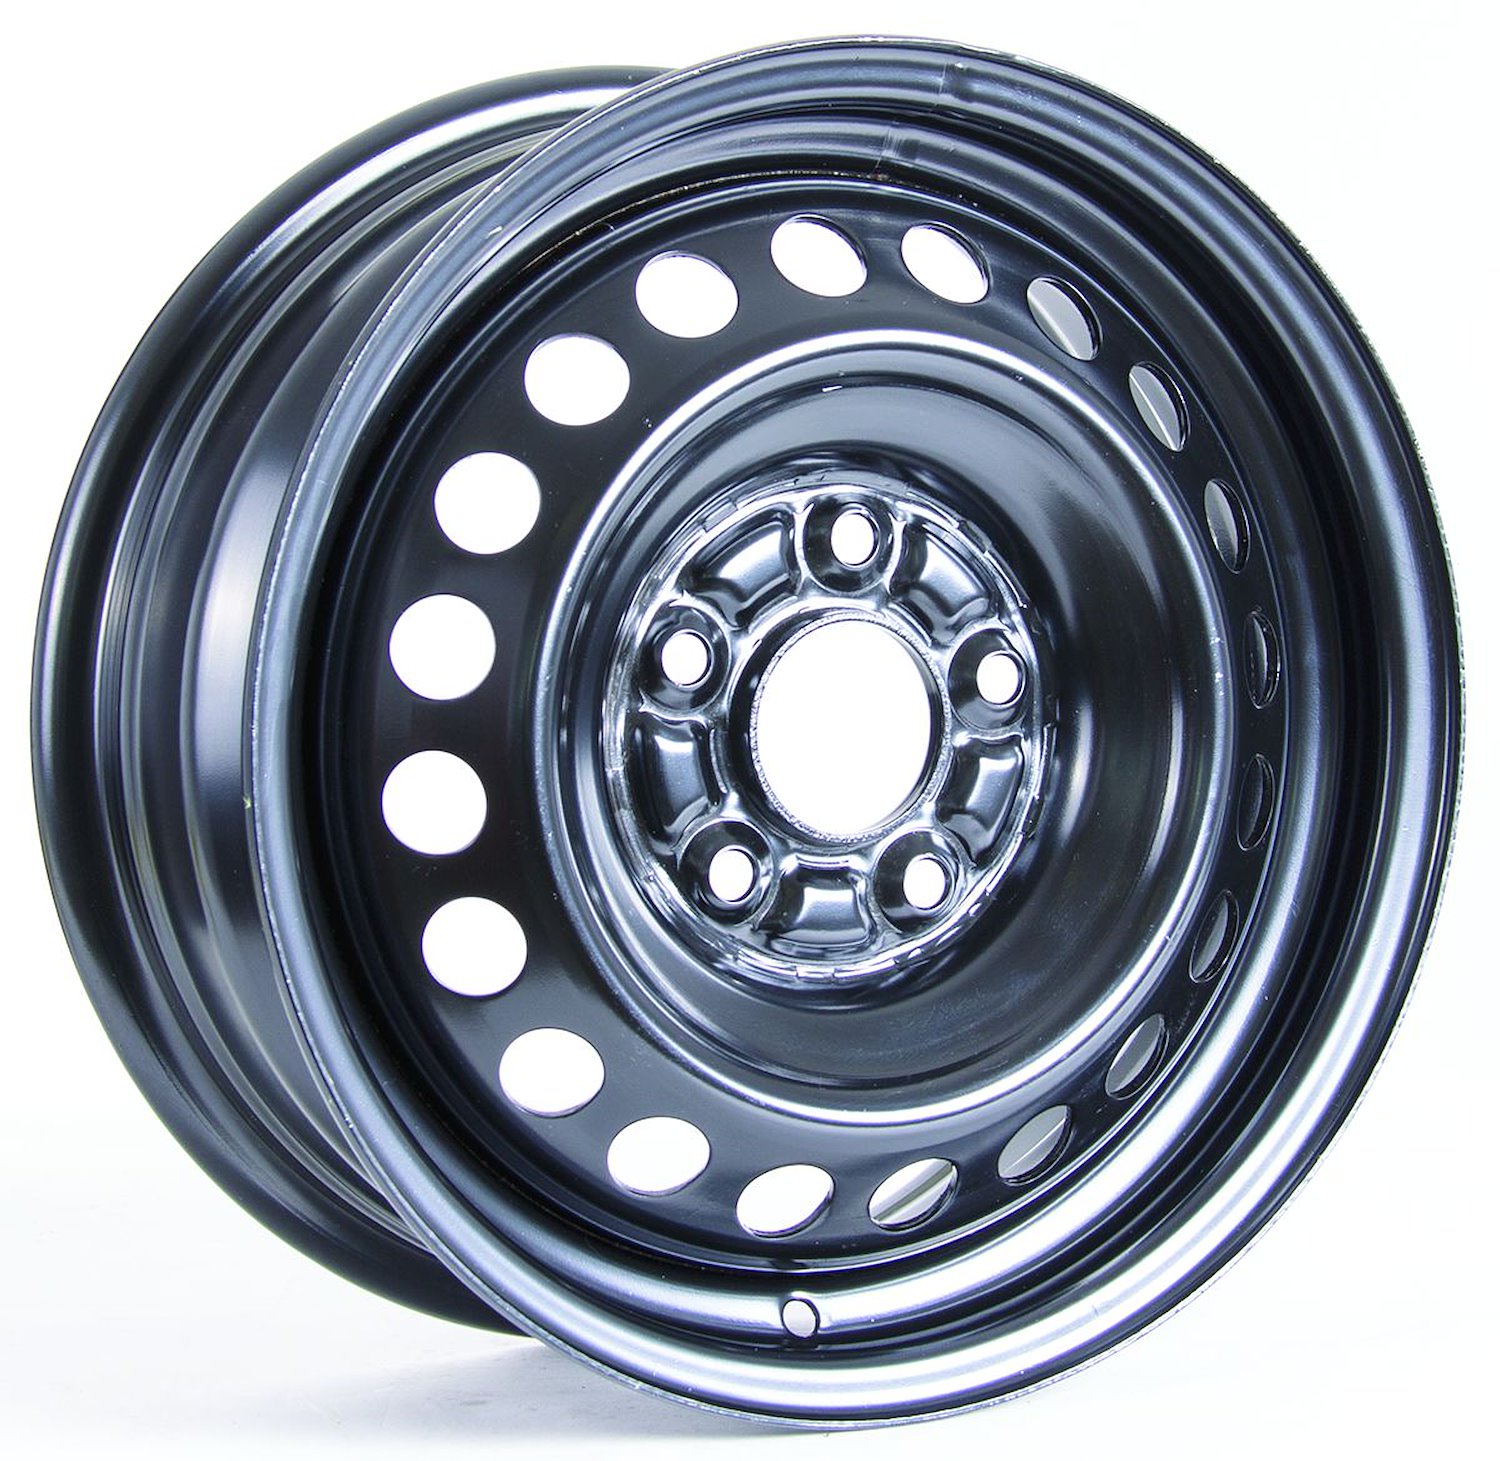 X40922 Steel Wheel [Size: 15" x 6"] Black Finish